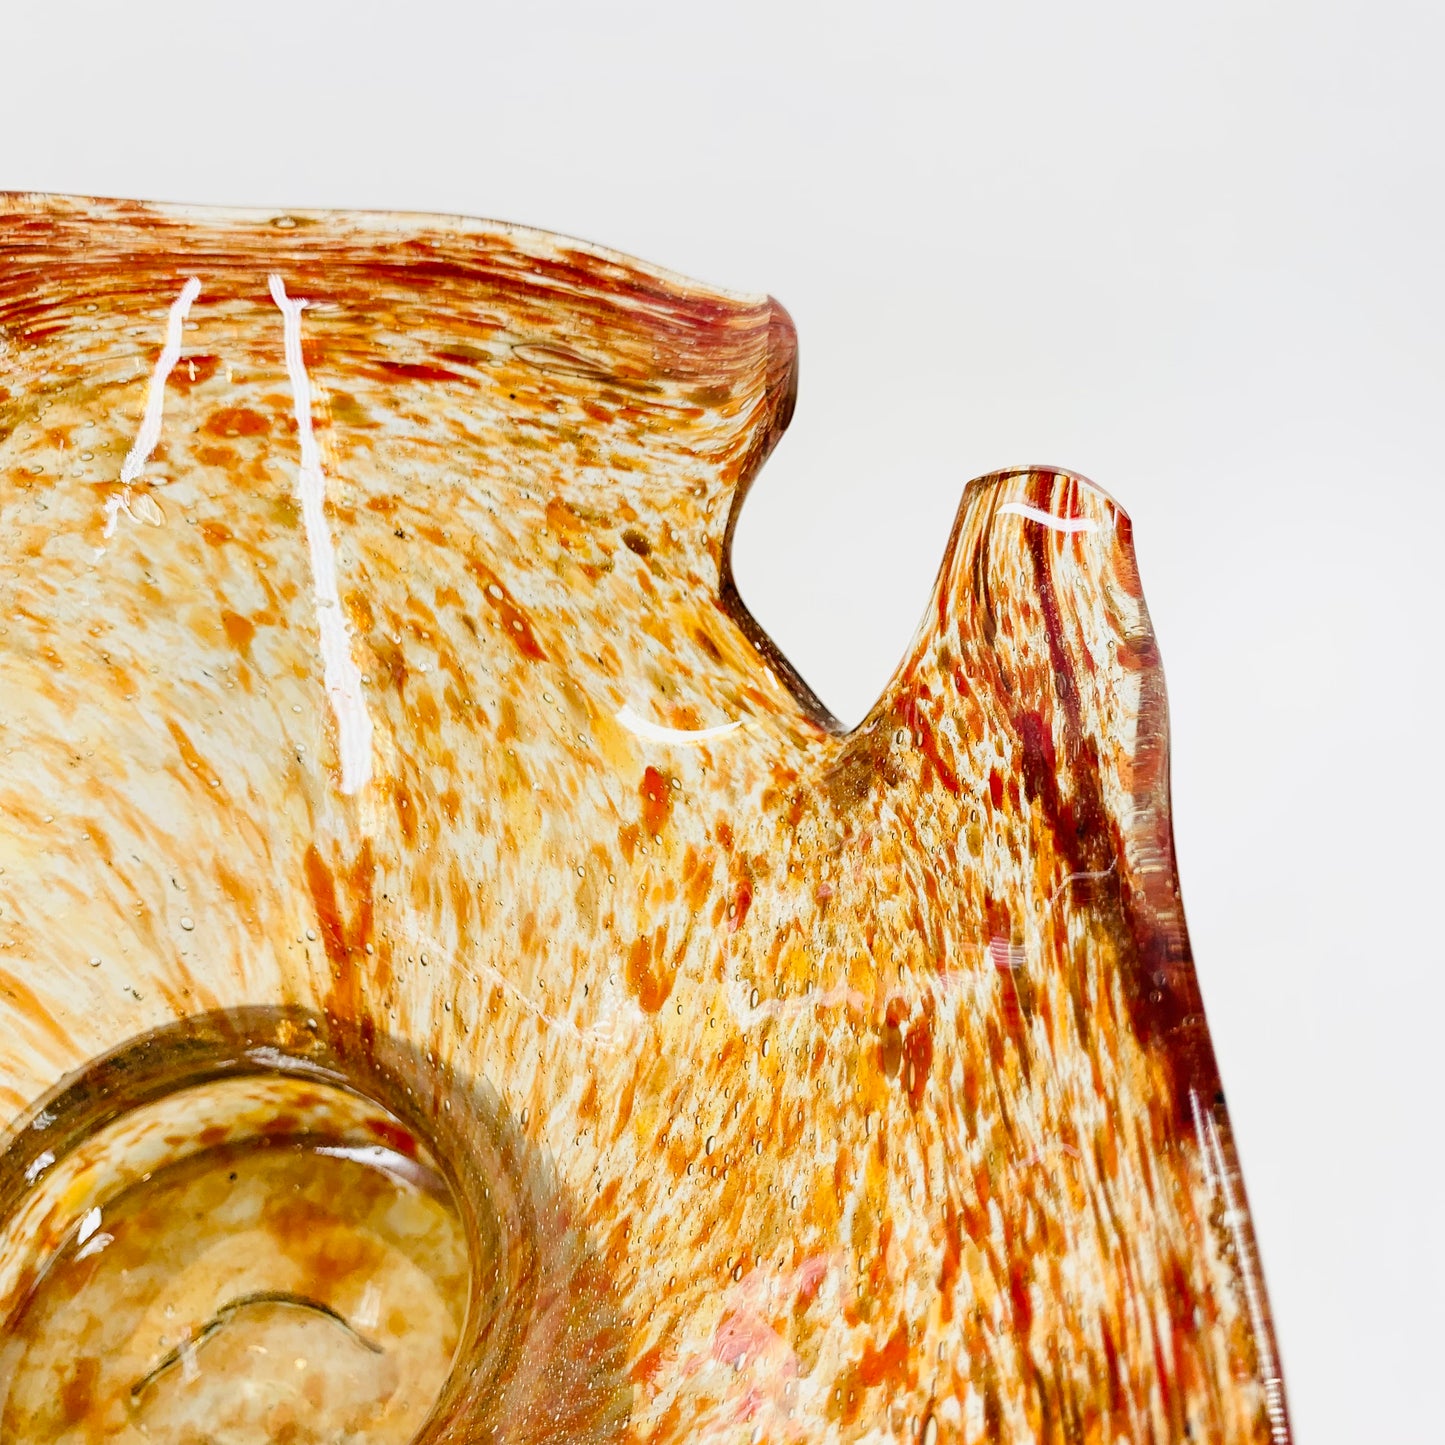 Midcentury mouth blown art glass basket vase